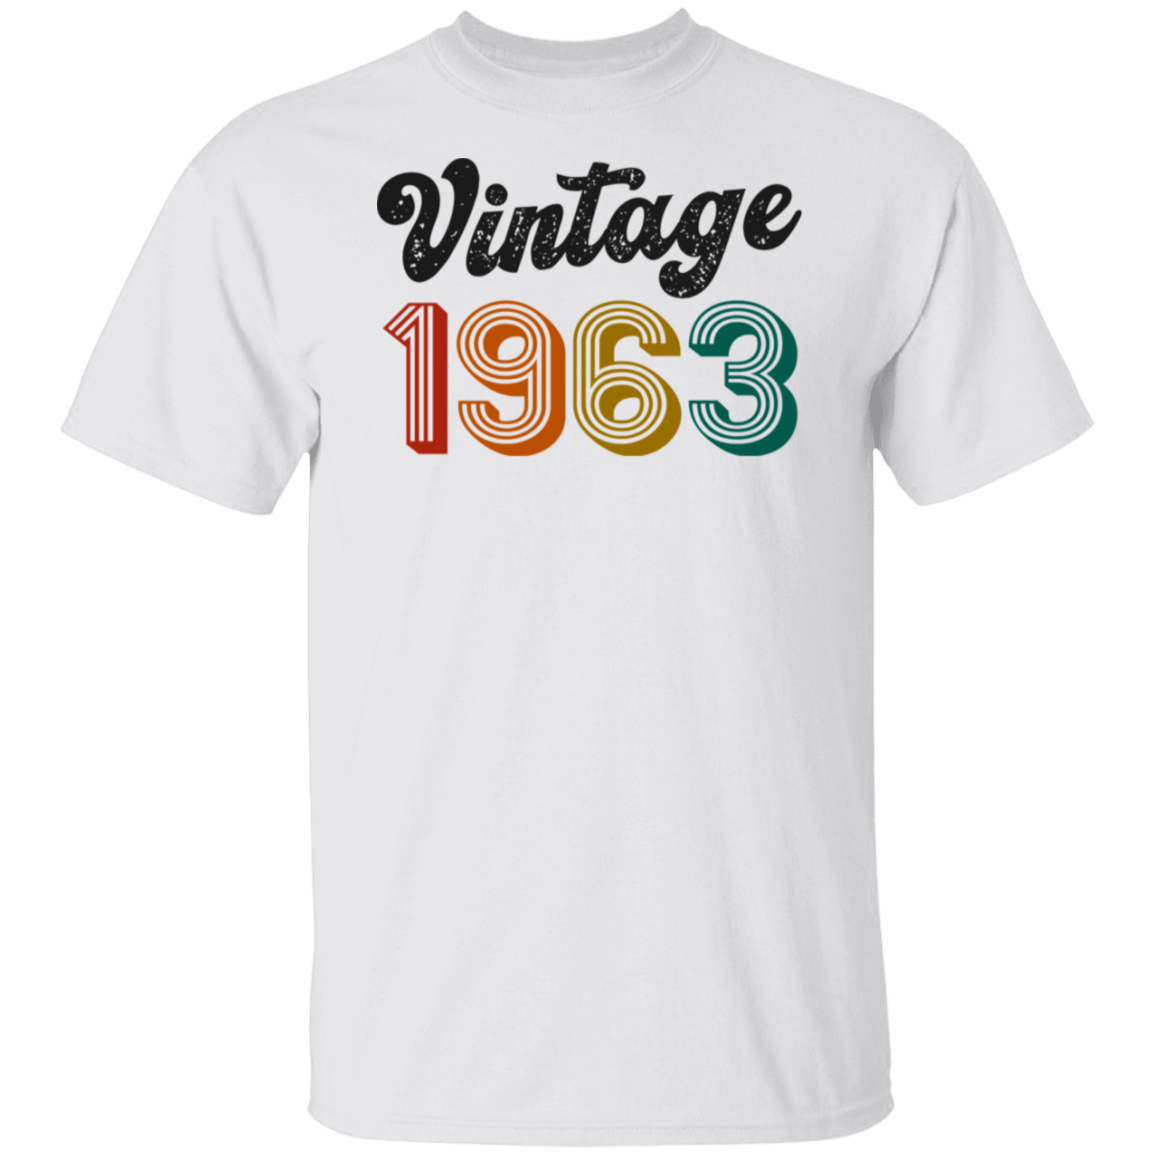 Vintage 1963 T-Shirt